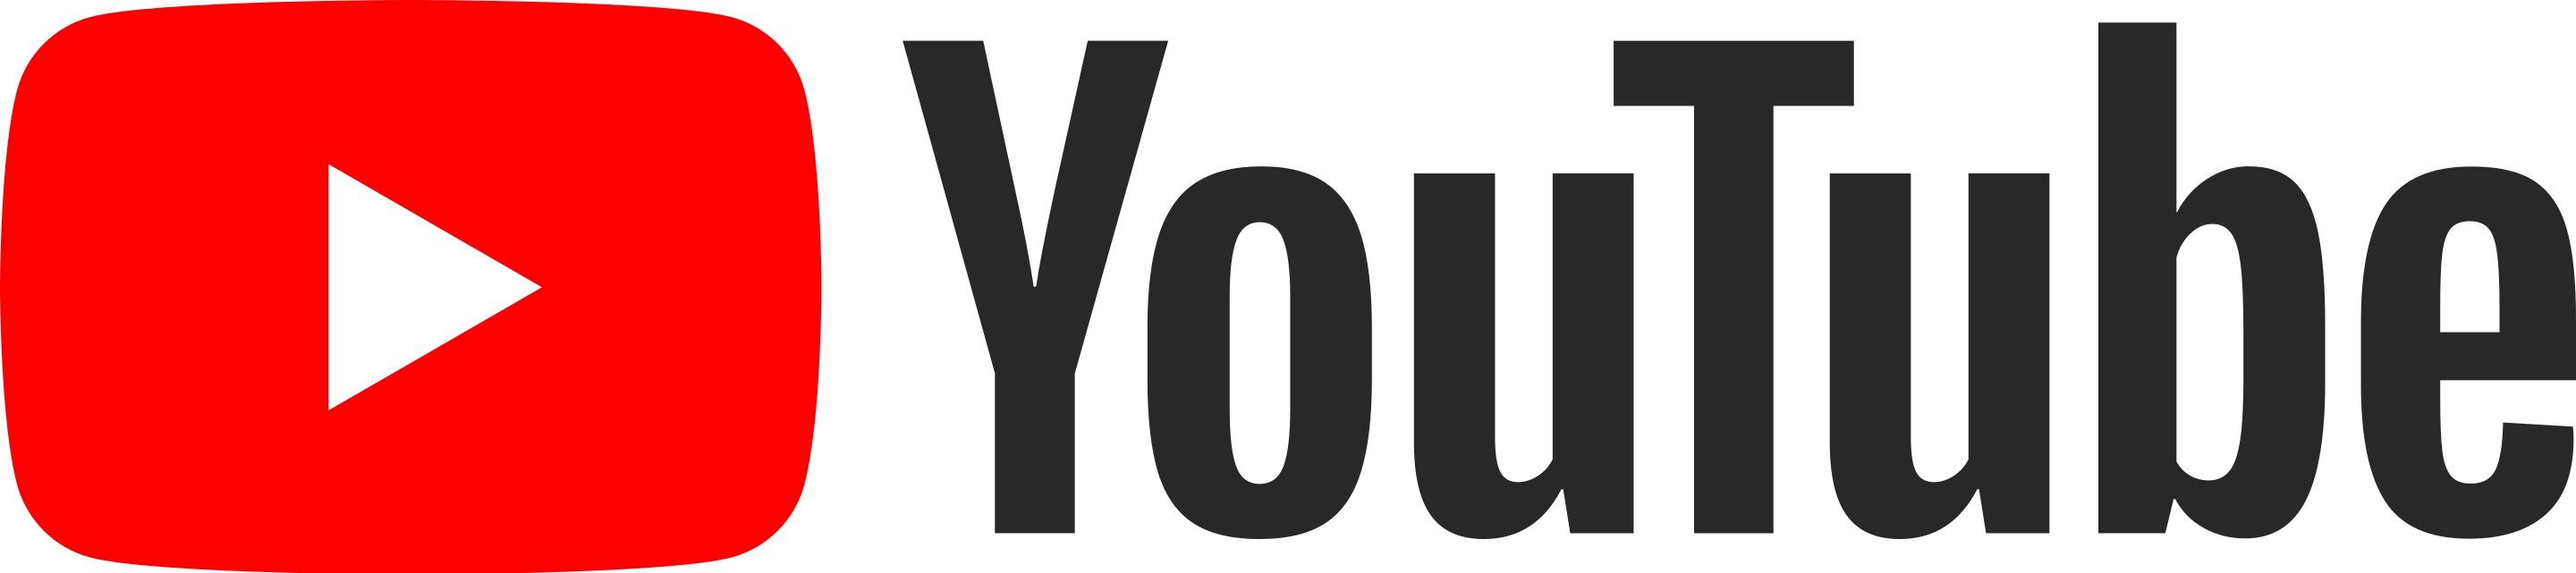 yt logo